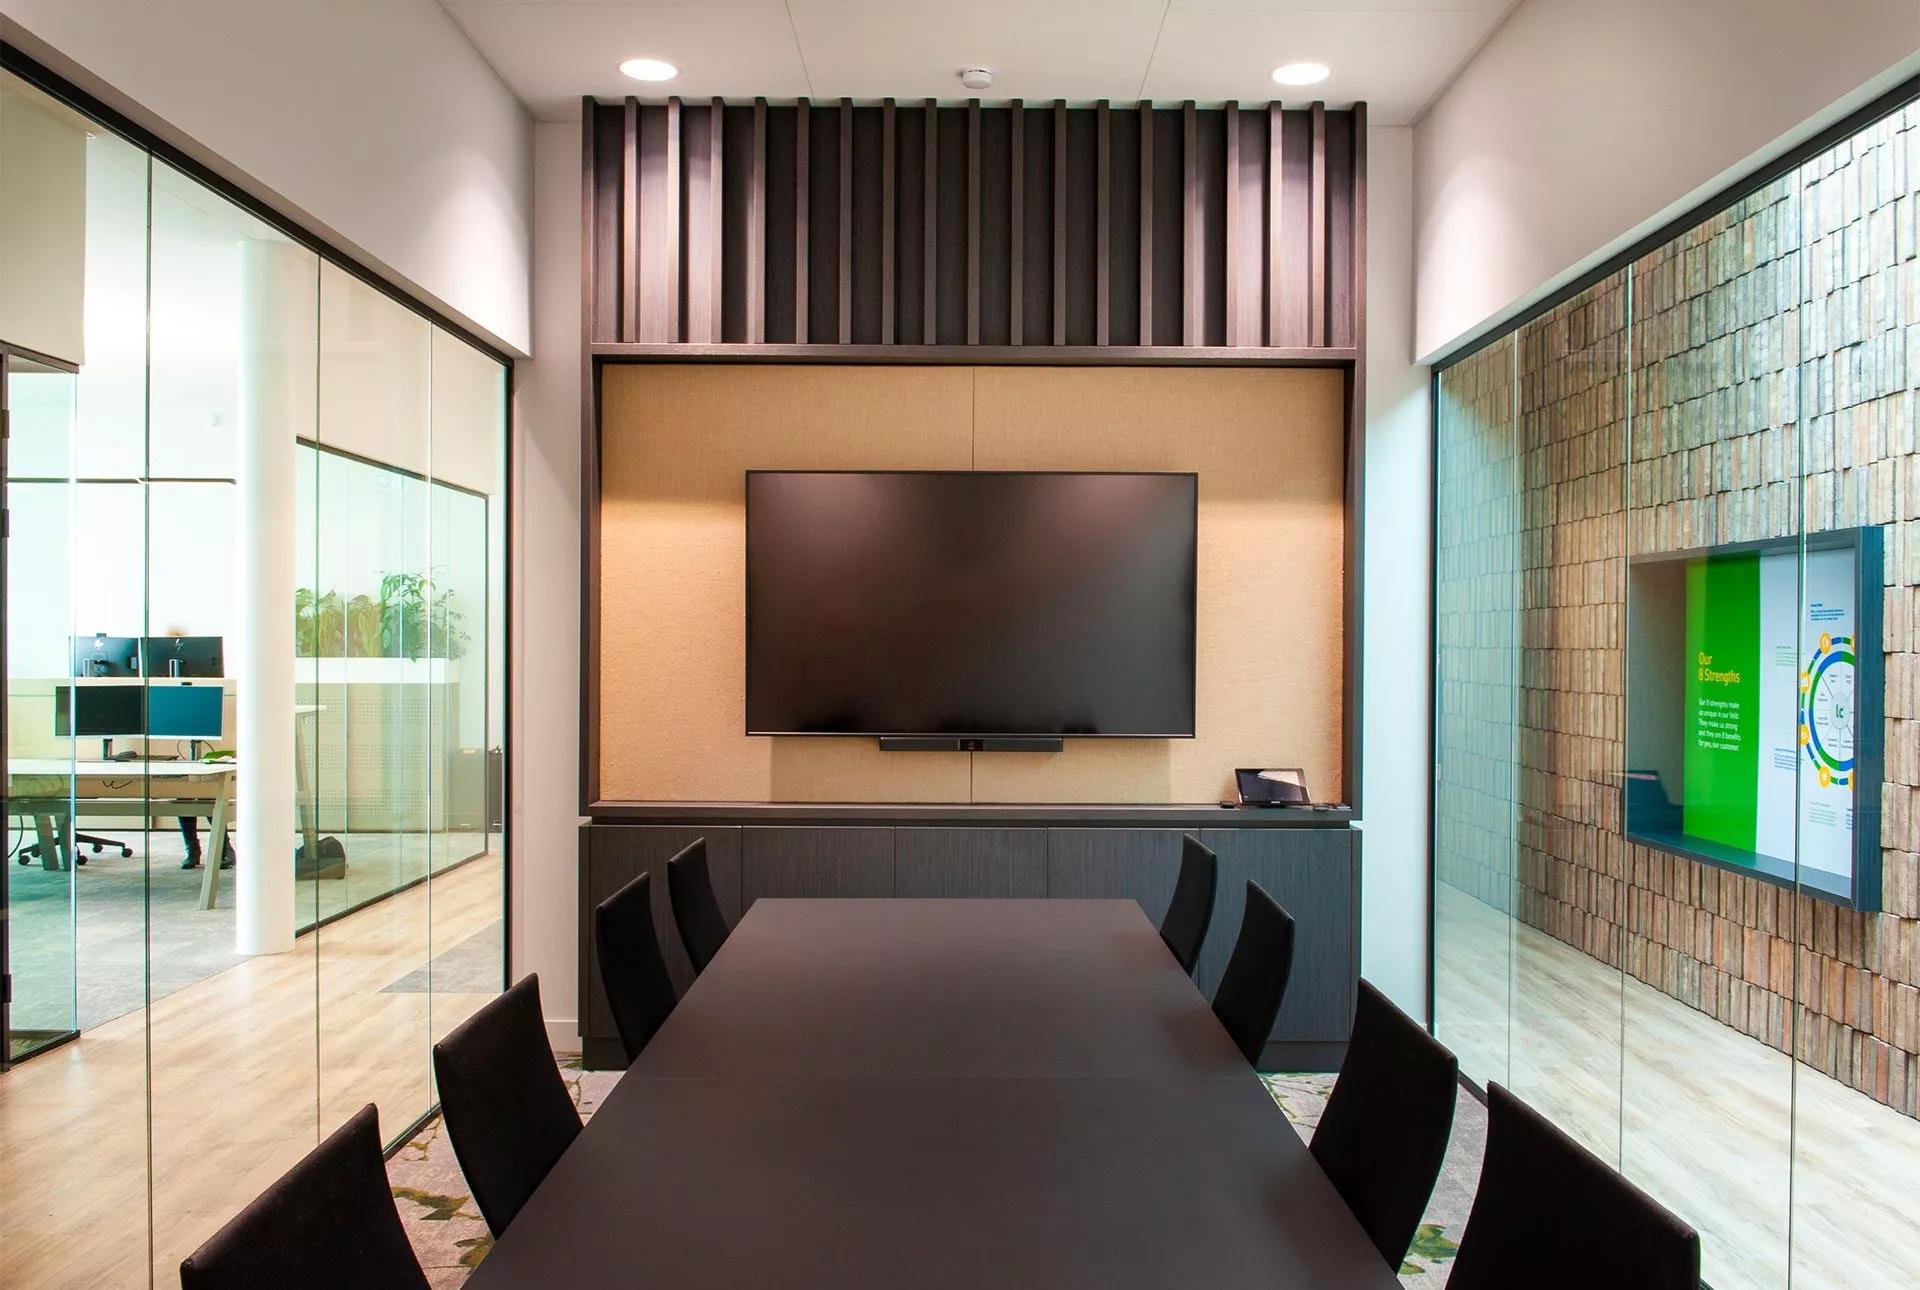 LC 包装公司办公室配备 Bose Videobar VB1 的大型会议室。